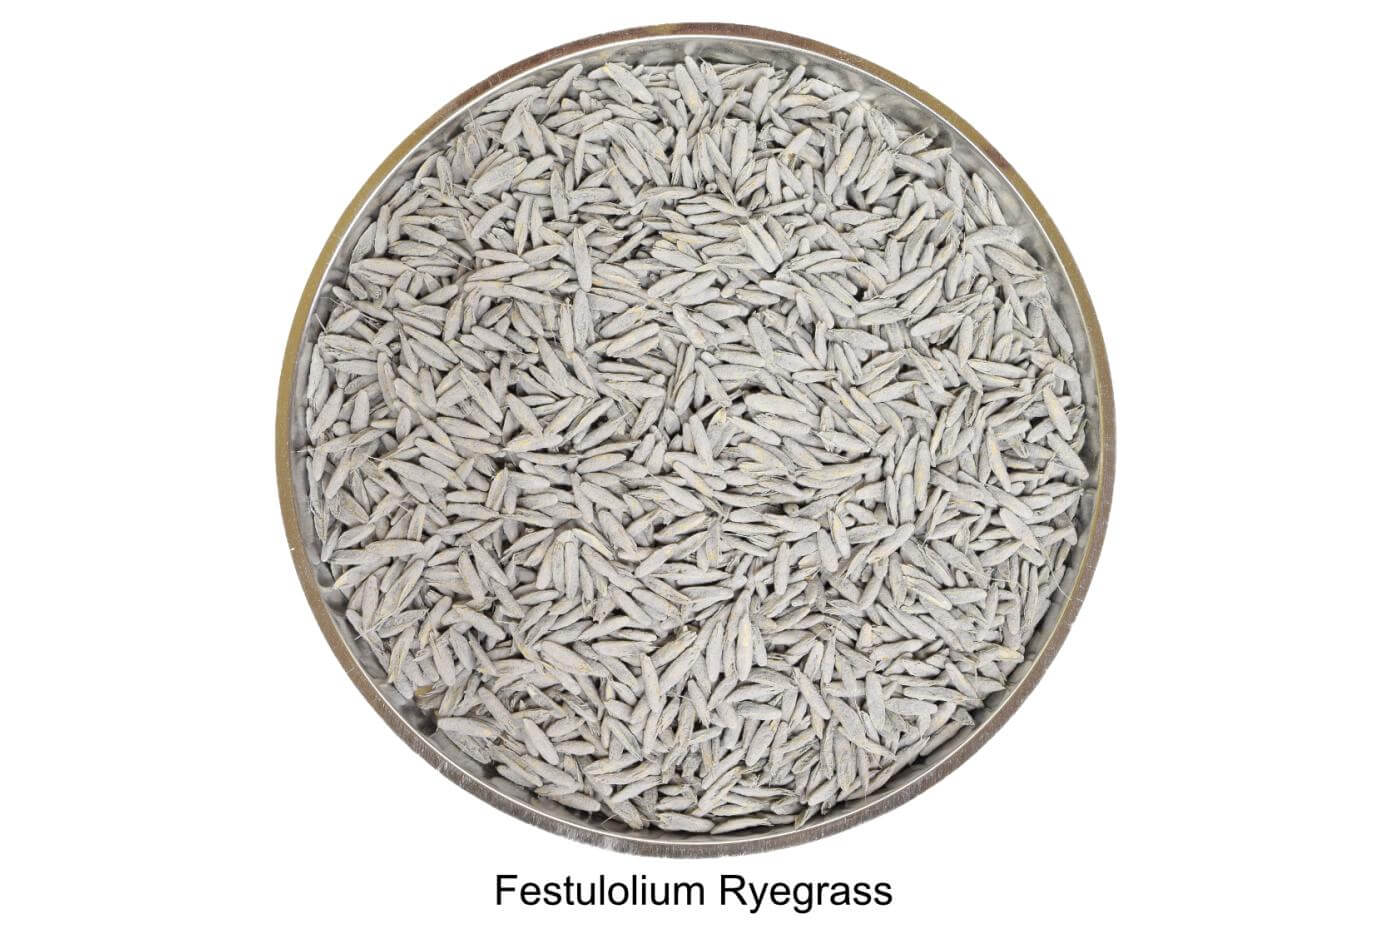 Coated Festulolium Ryegrass seed